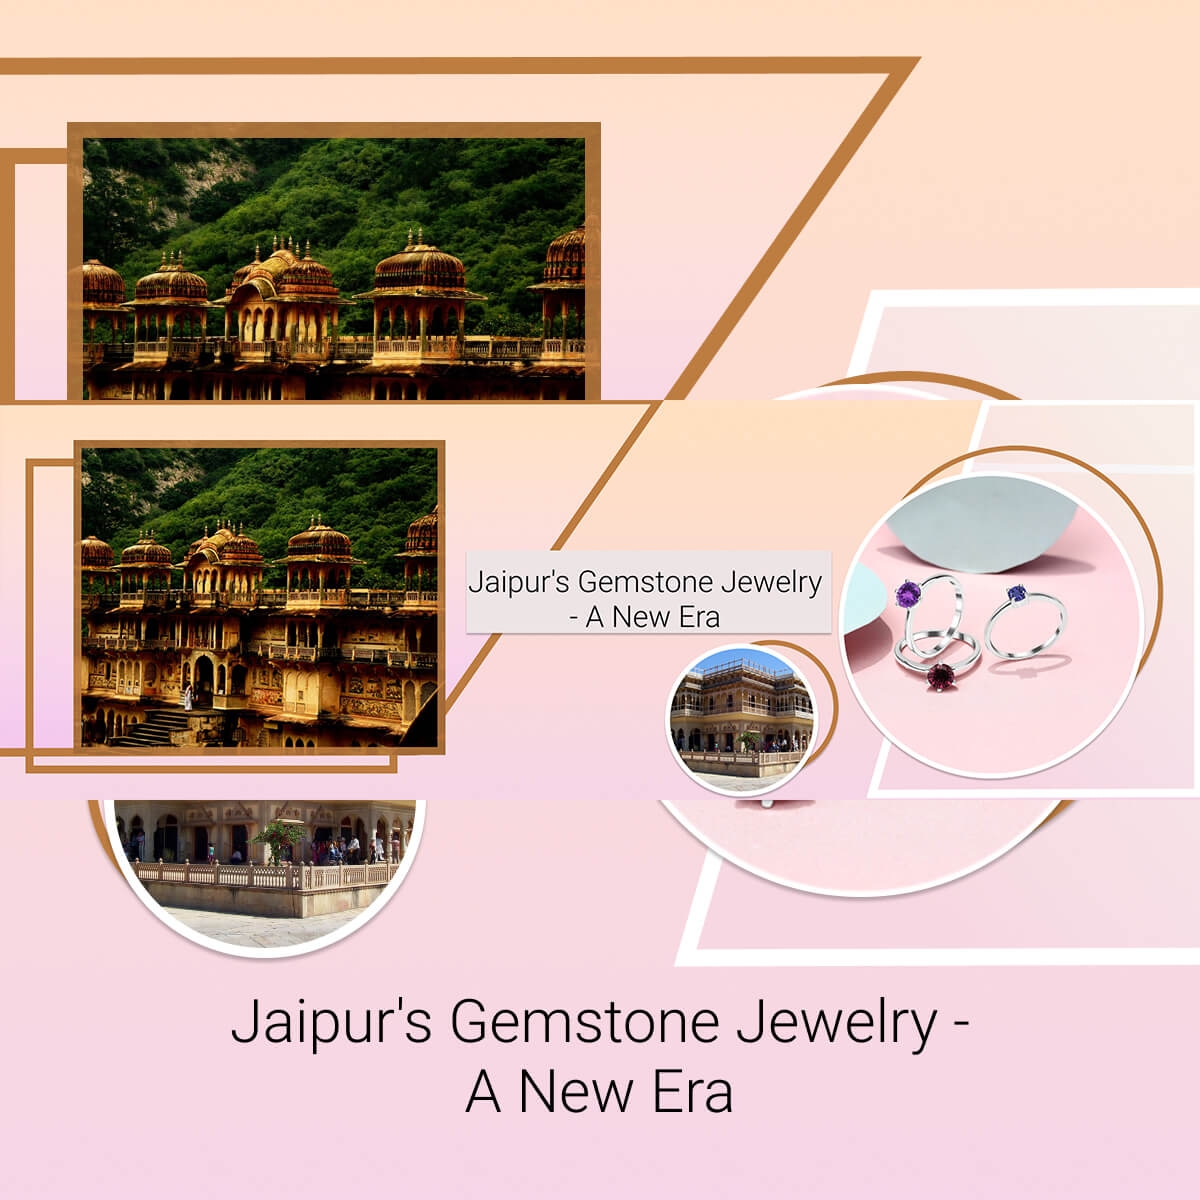 Redefining Trends of Jaipur's Gemstone Jewelry